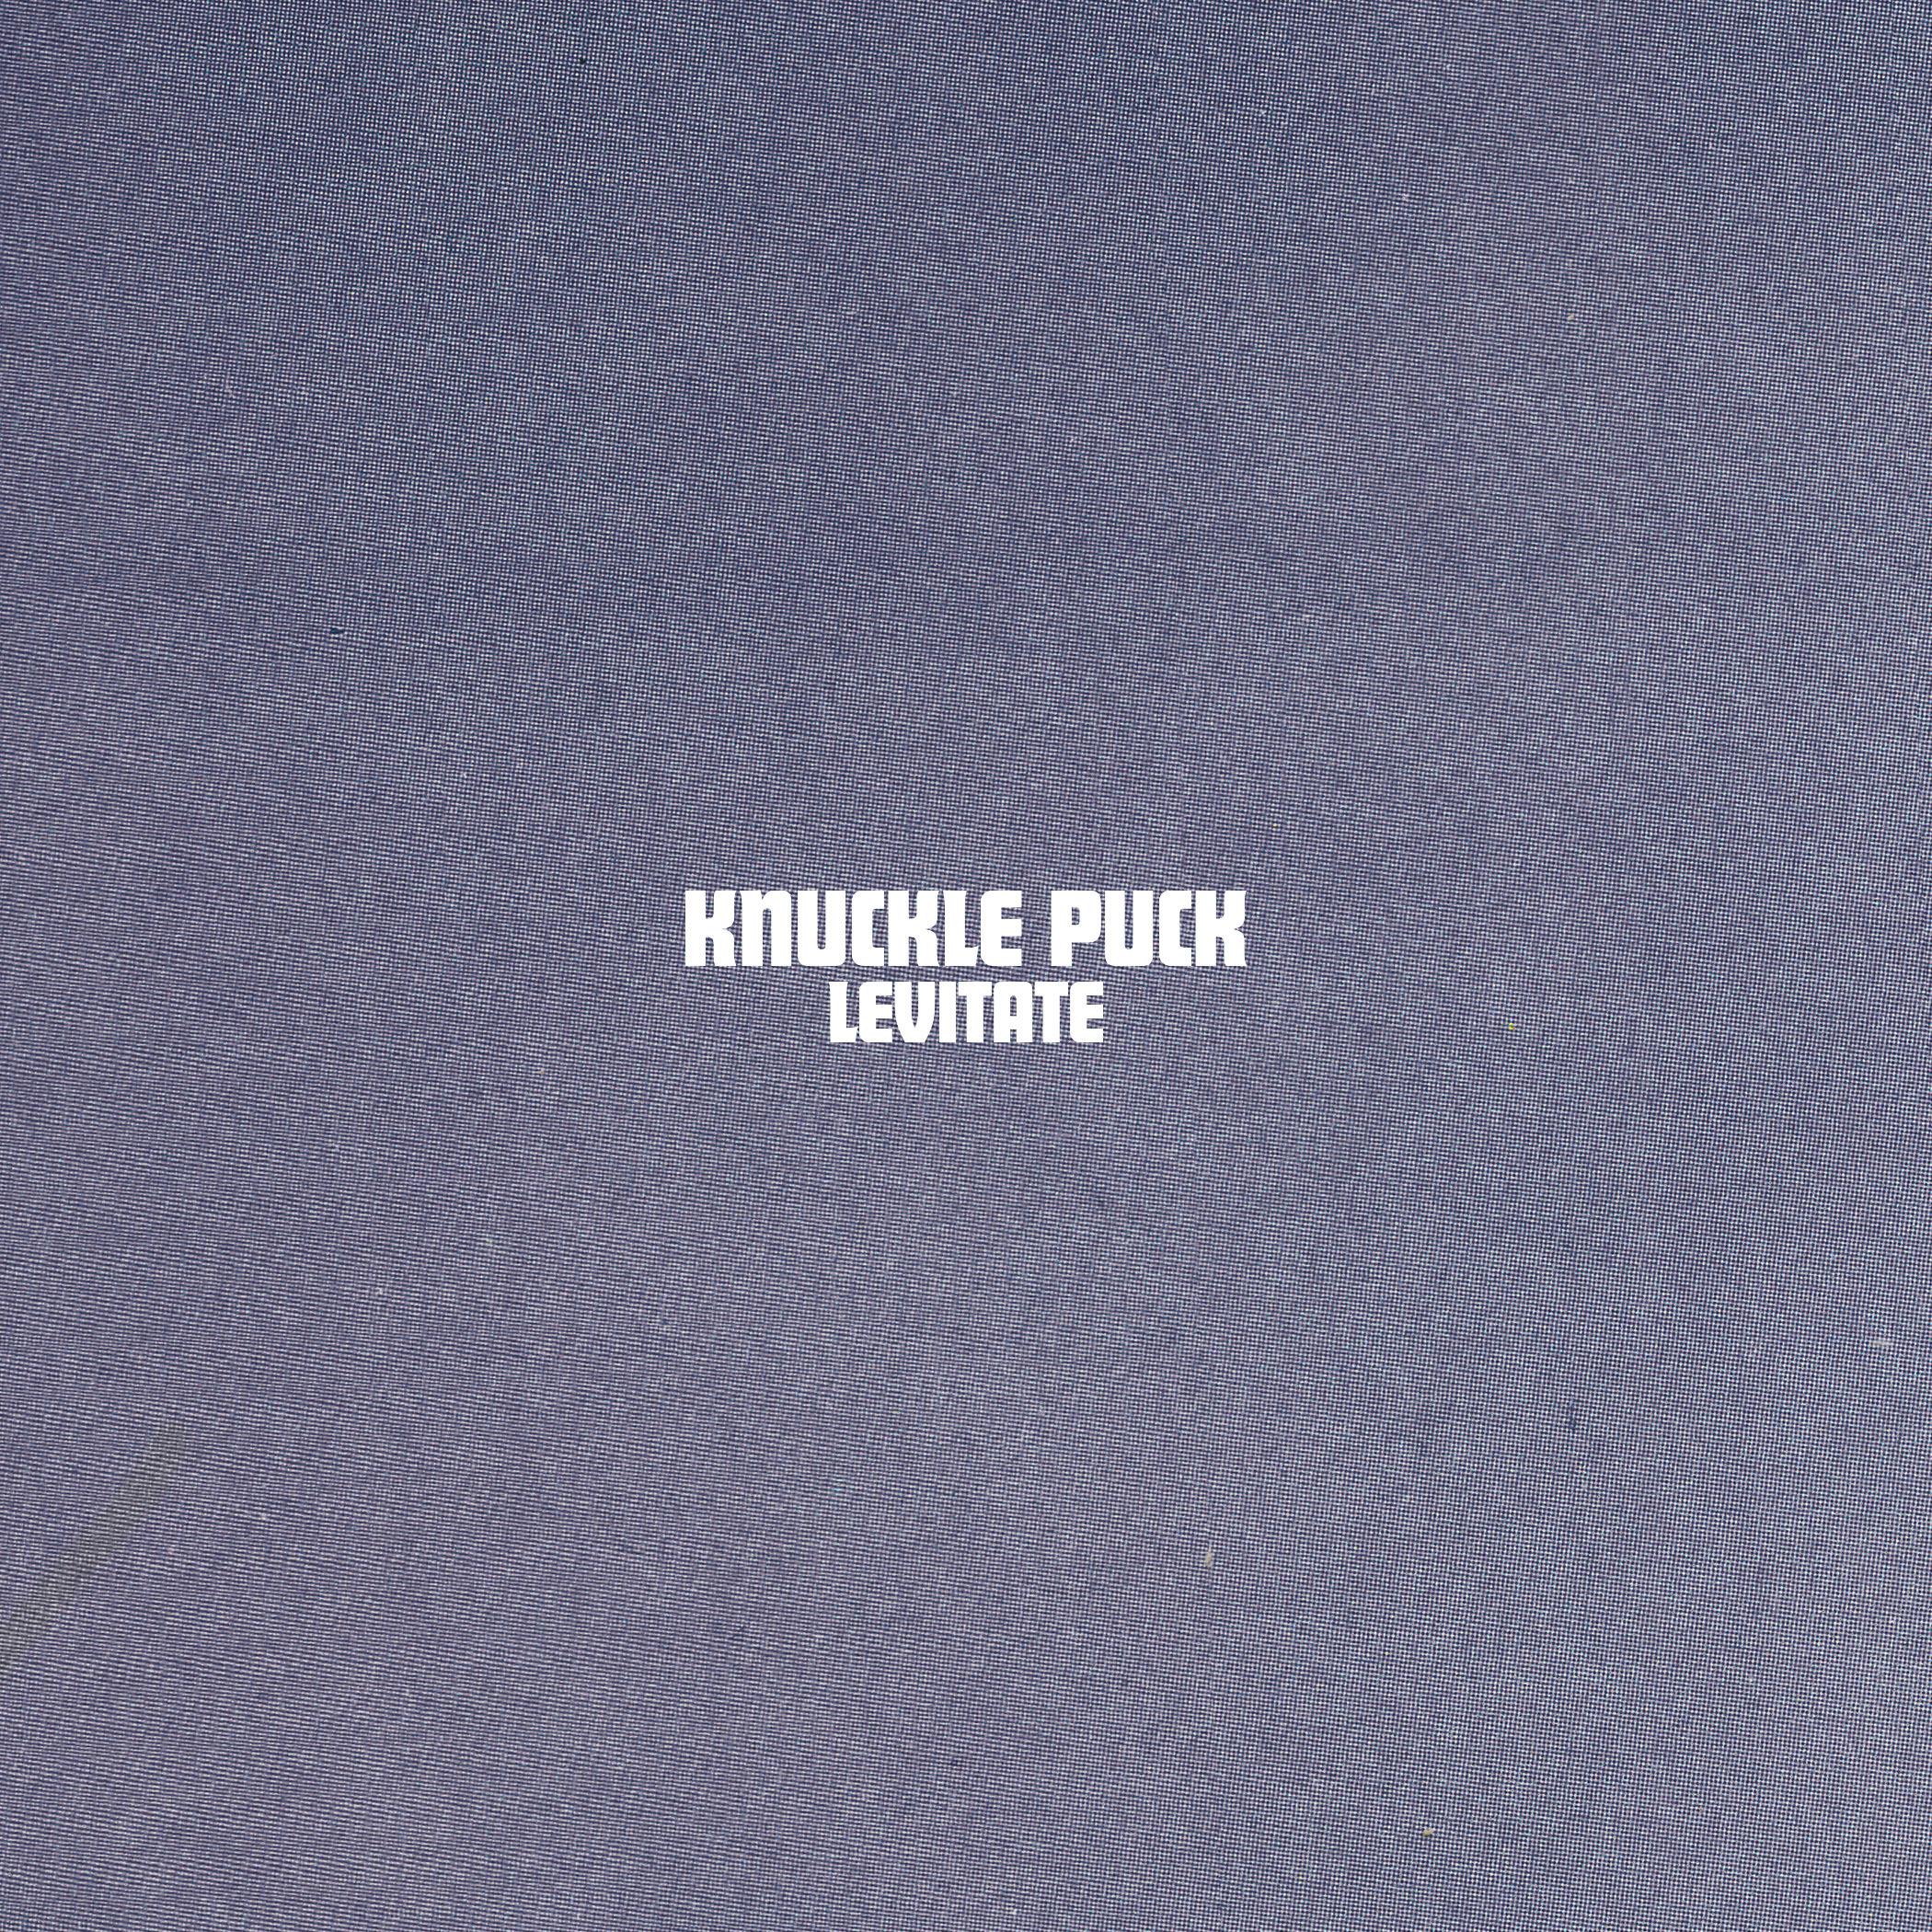 Knuckle Puck - Levitate